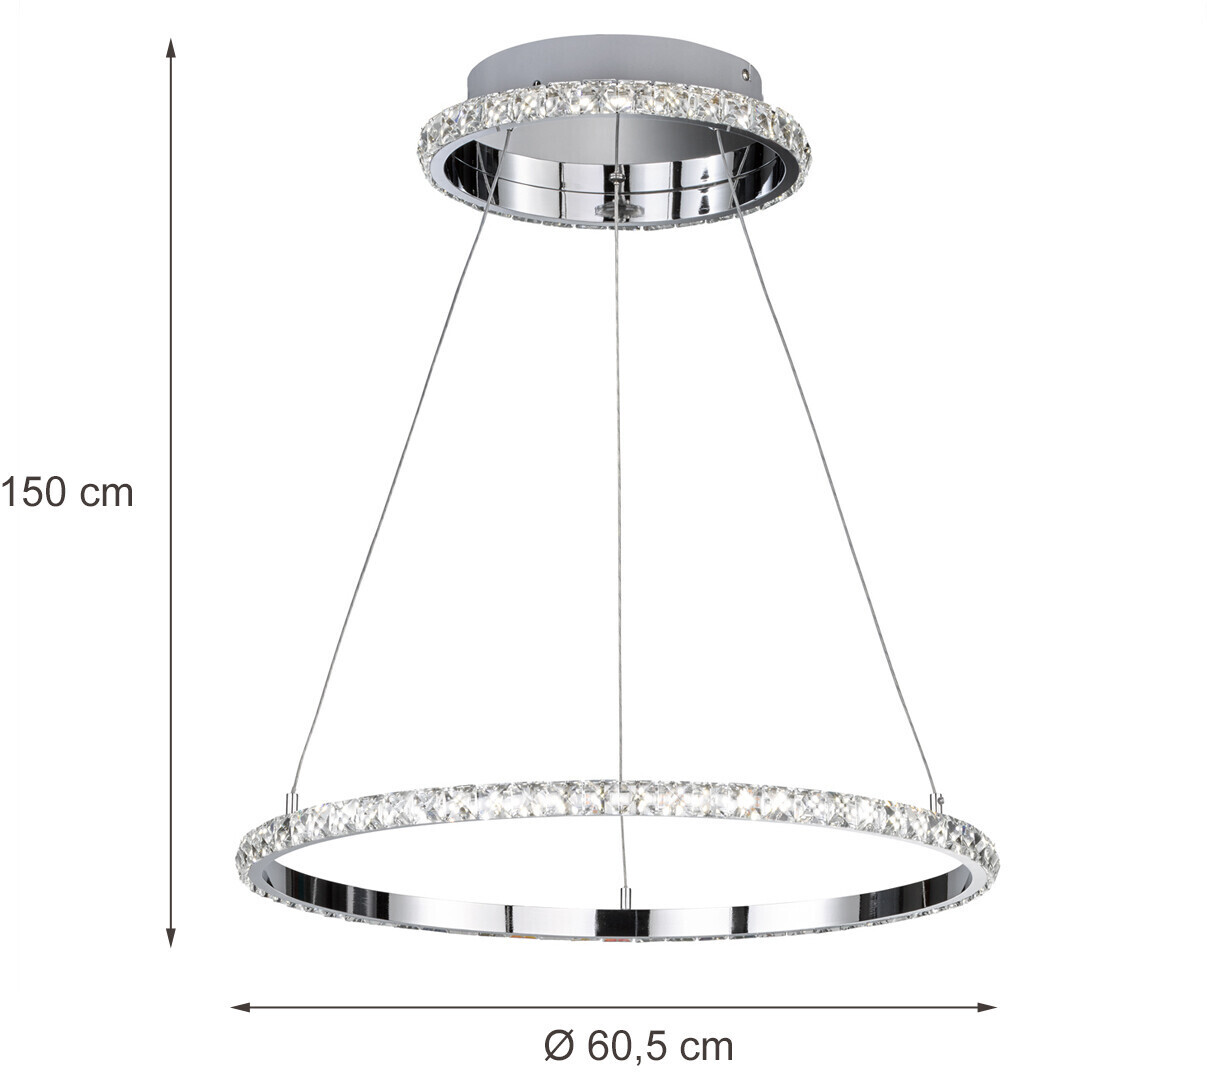 Silber LED Kristall, Wofi € Pendelleuchte mit Preisvergleich | ab 2 bei 60,5cm Ø HARLEY Ringe 49,95